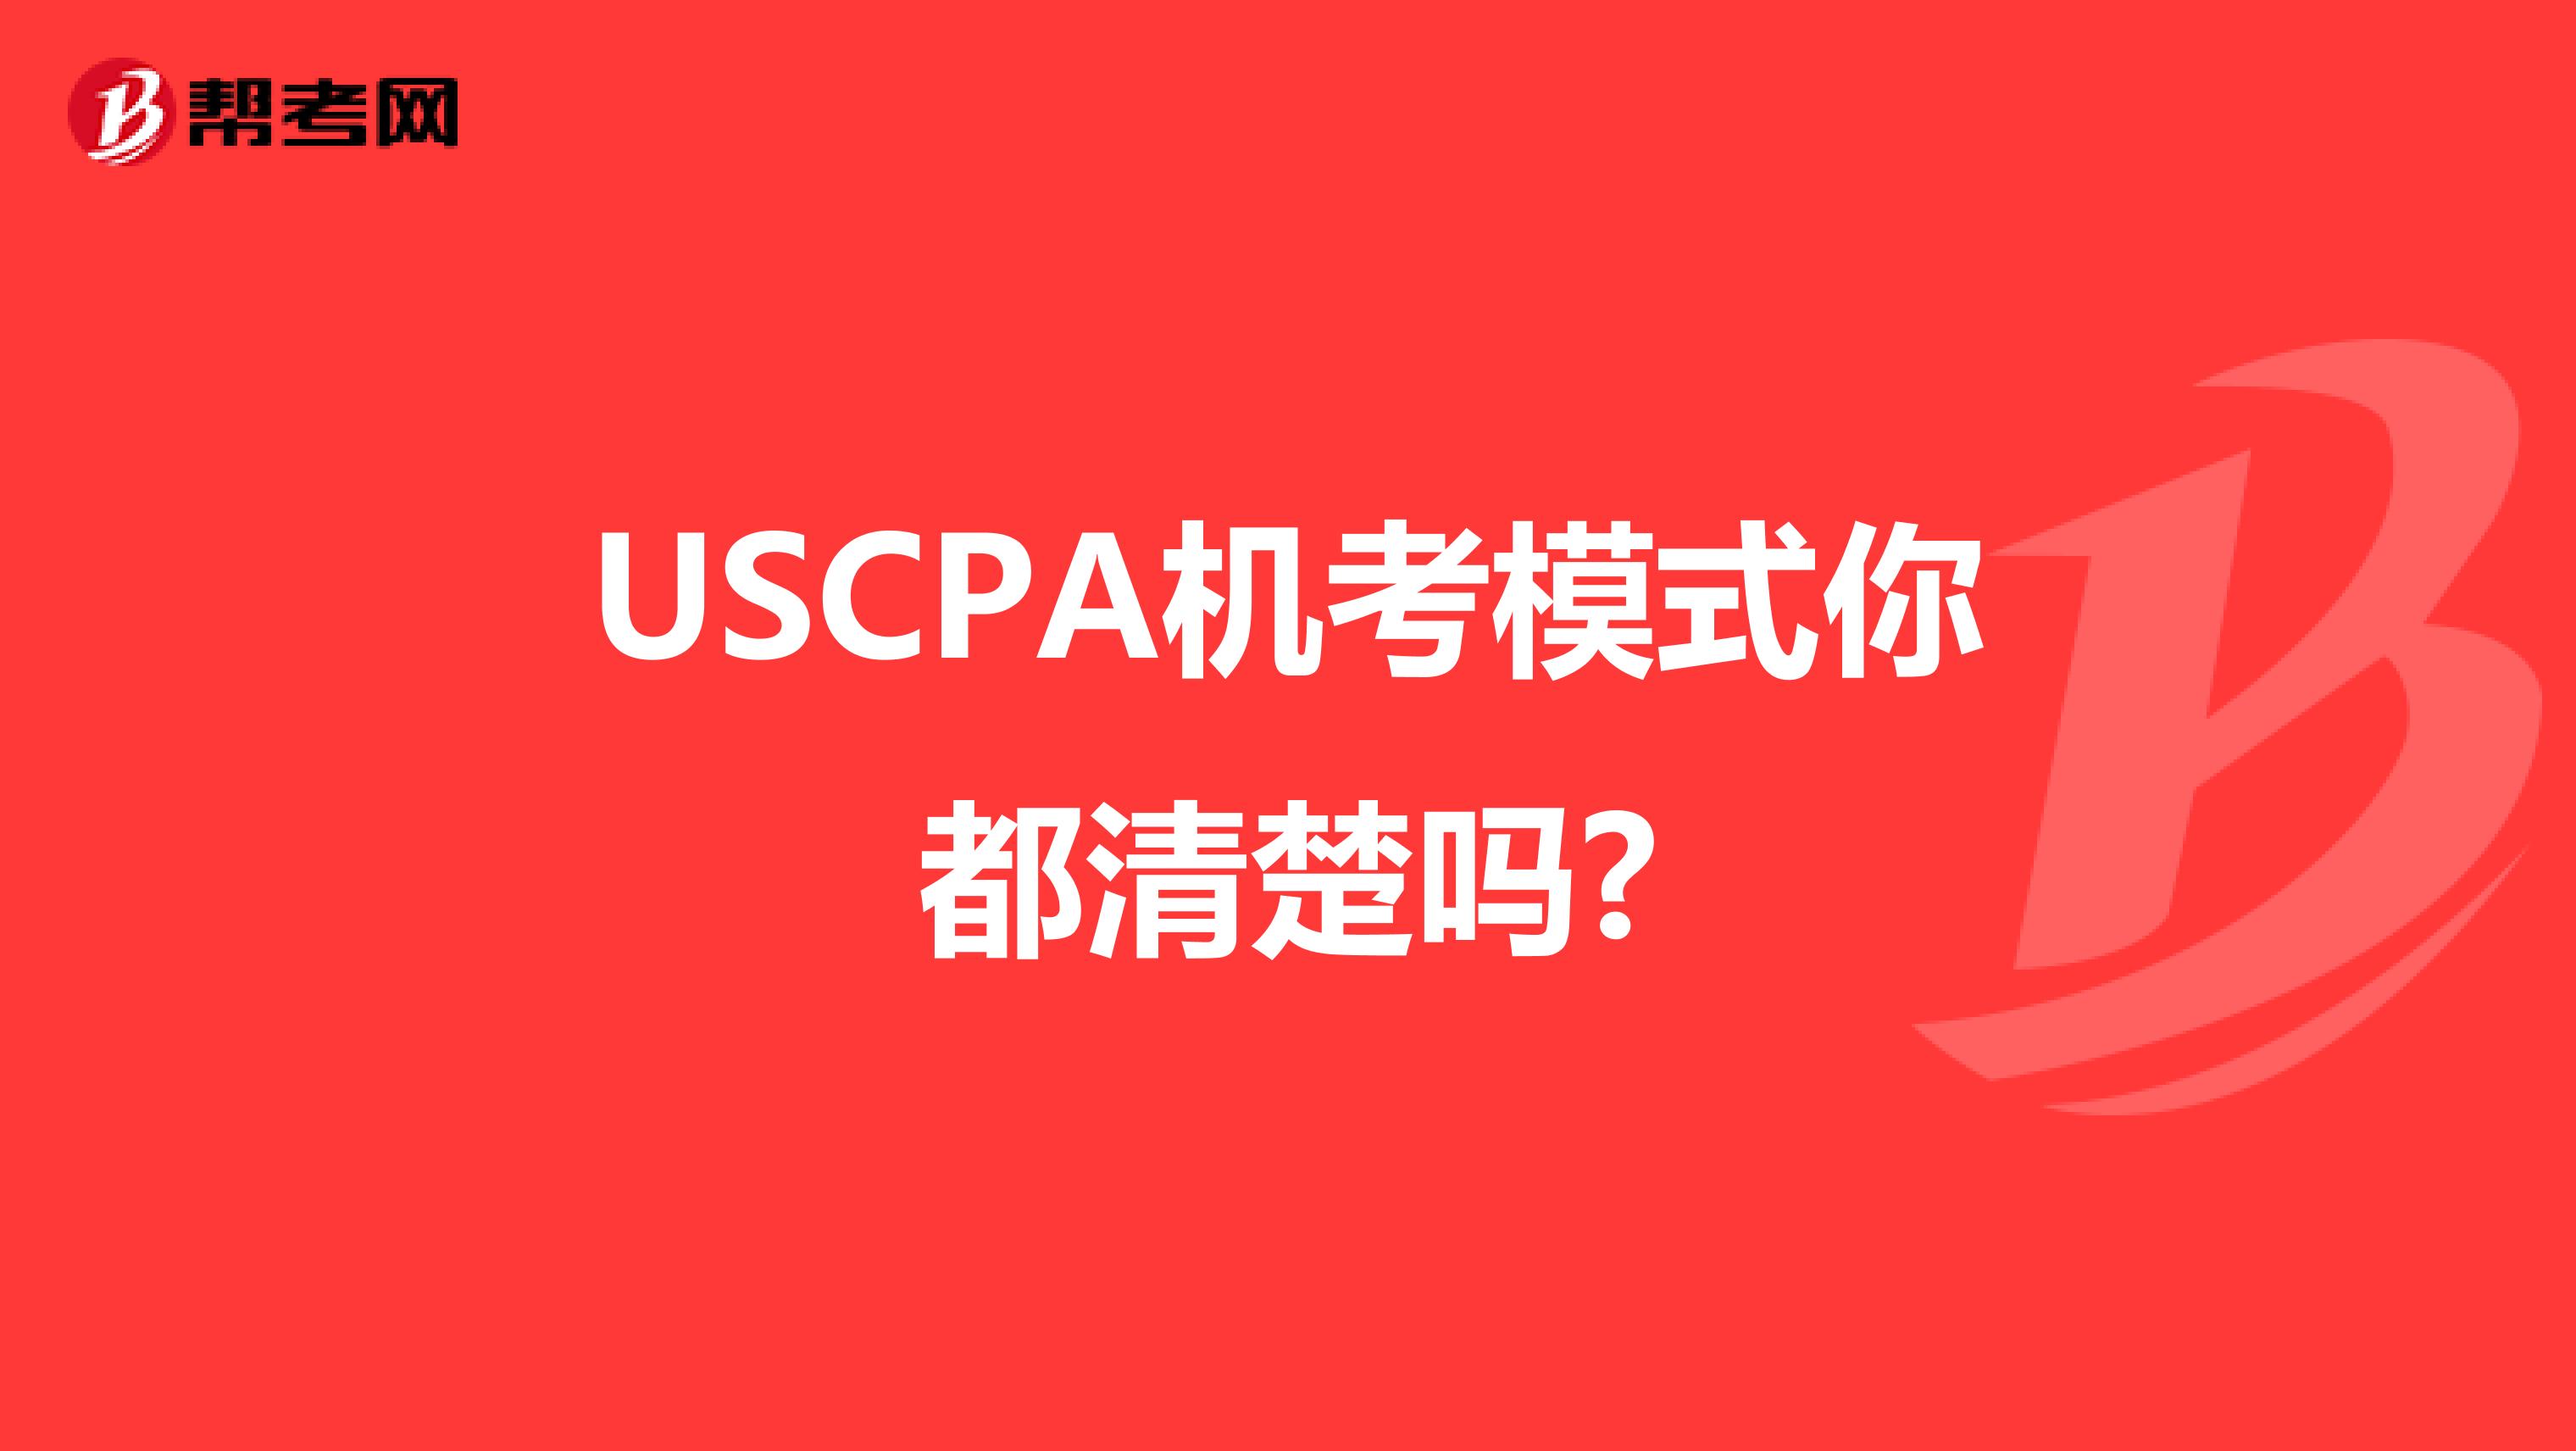 USCPA机考模式你都清楚吗?